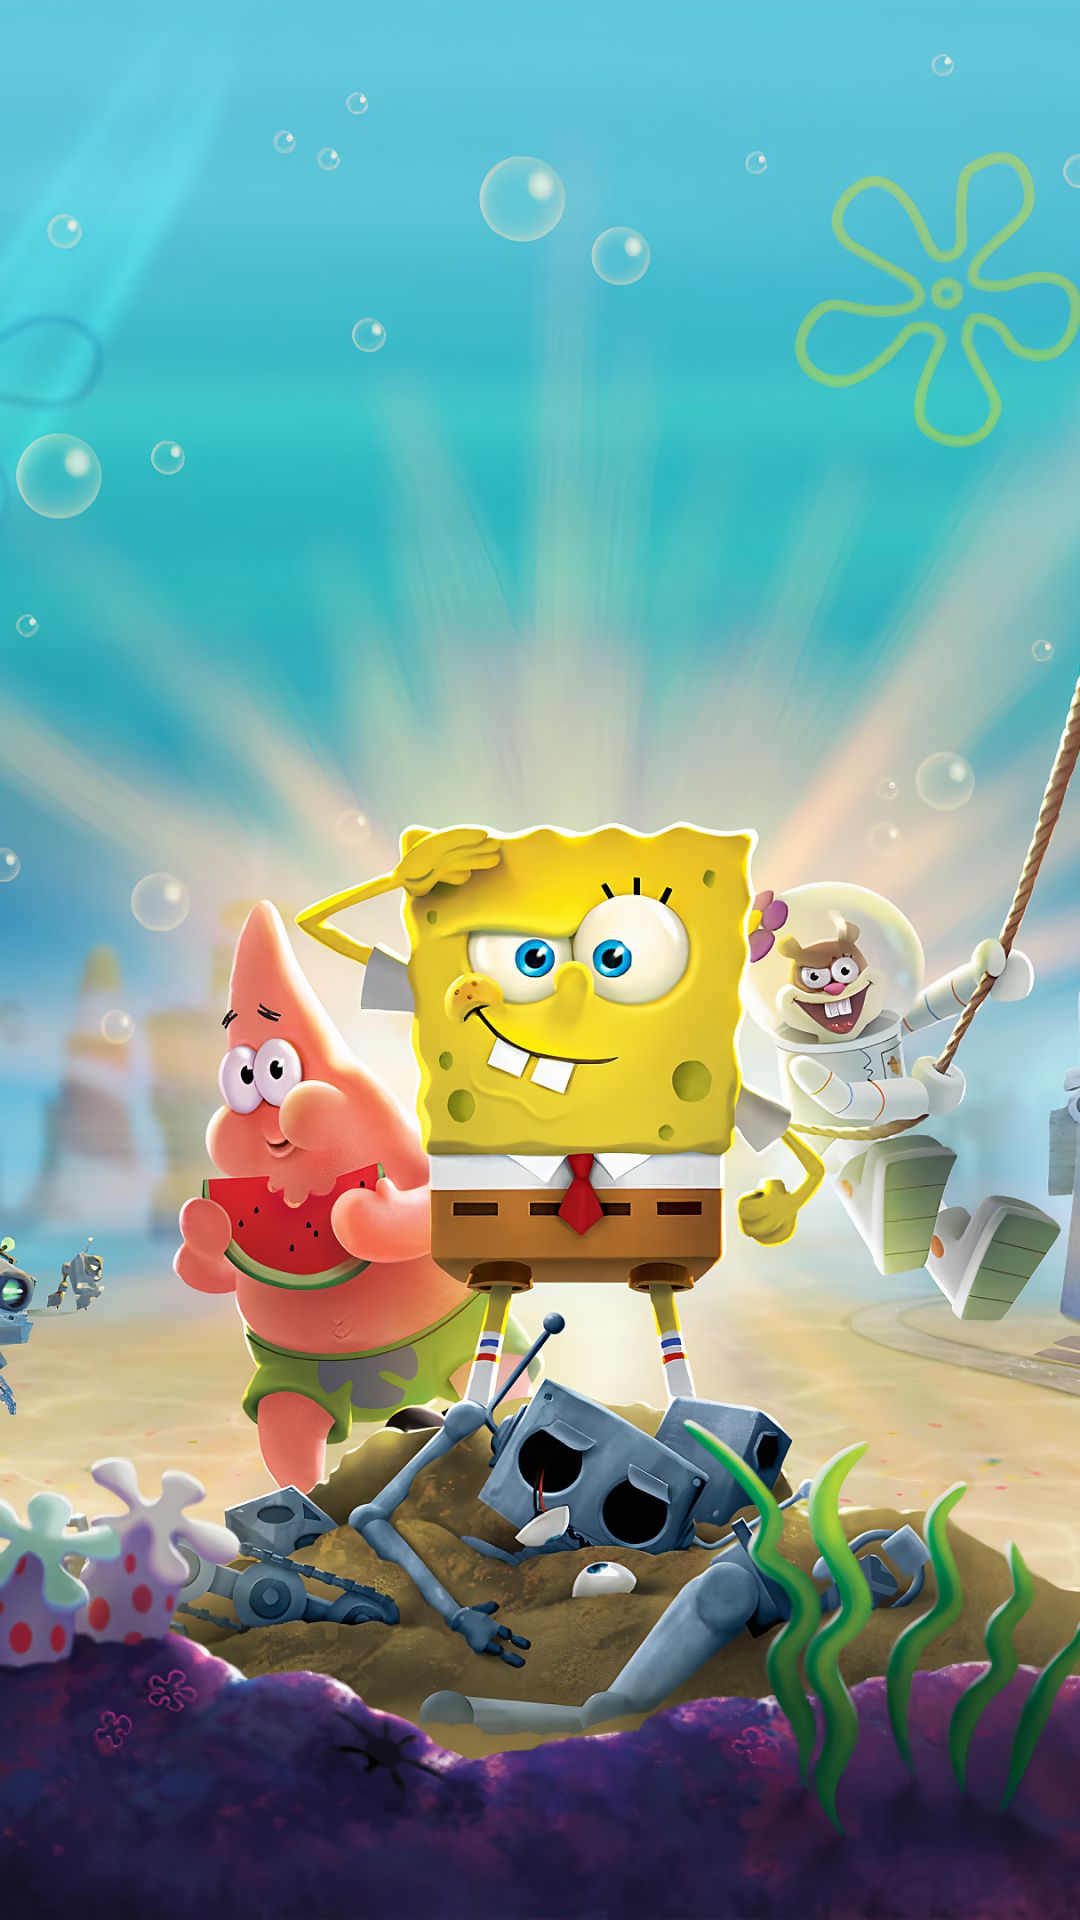 spongebob squarepants, video game, spongebob squarepants: battle for bikini bottom, patrick star